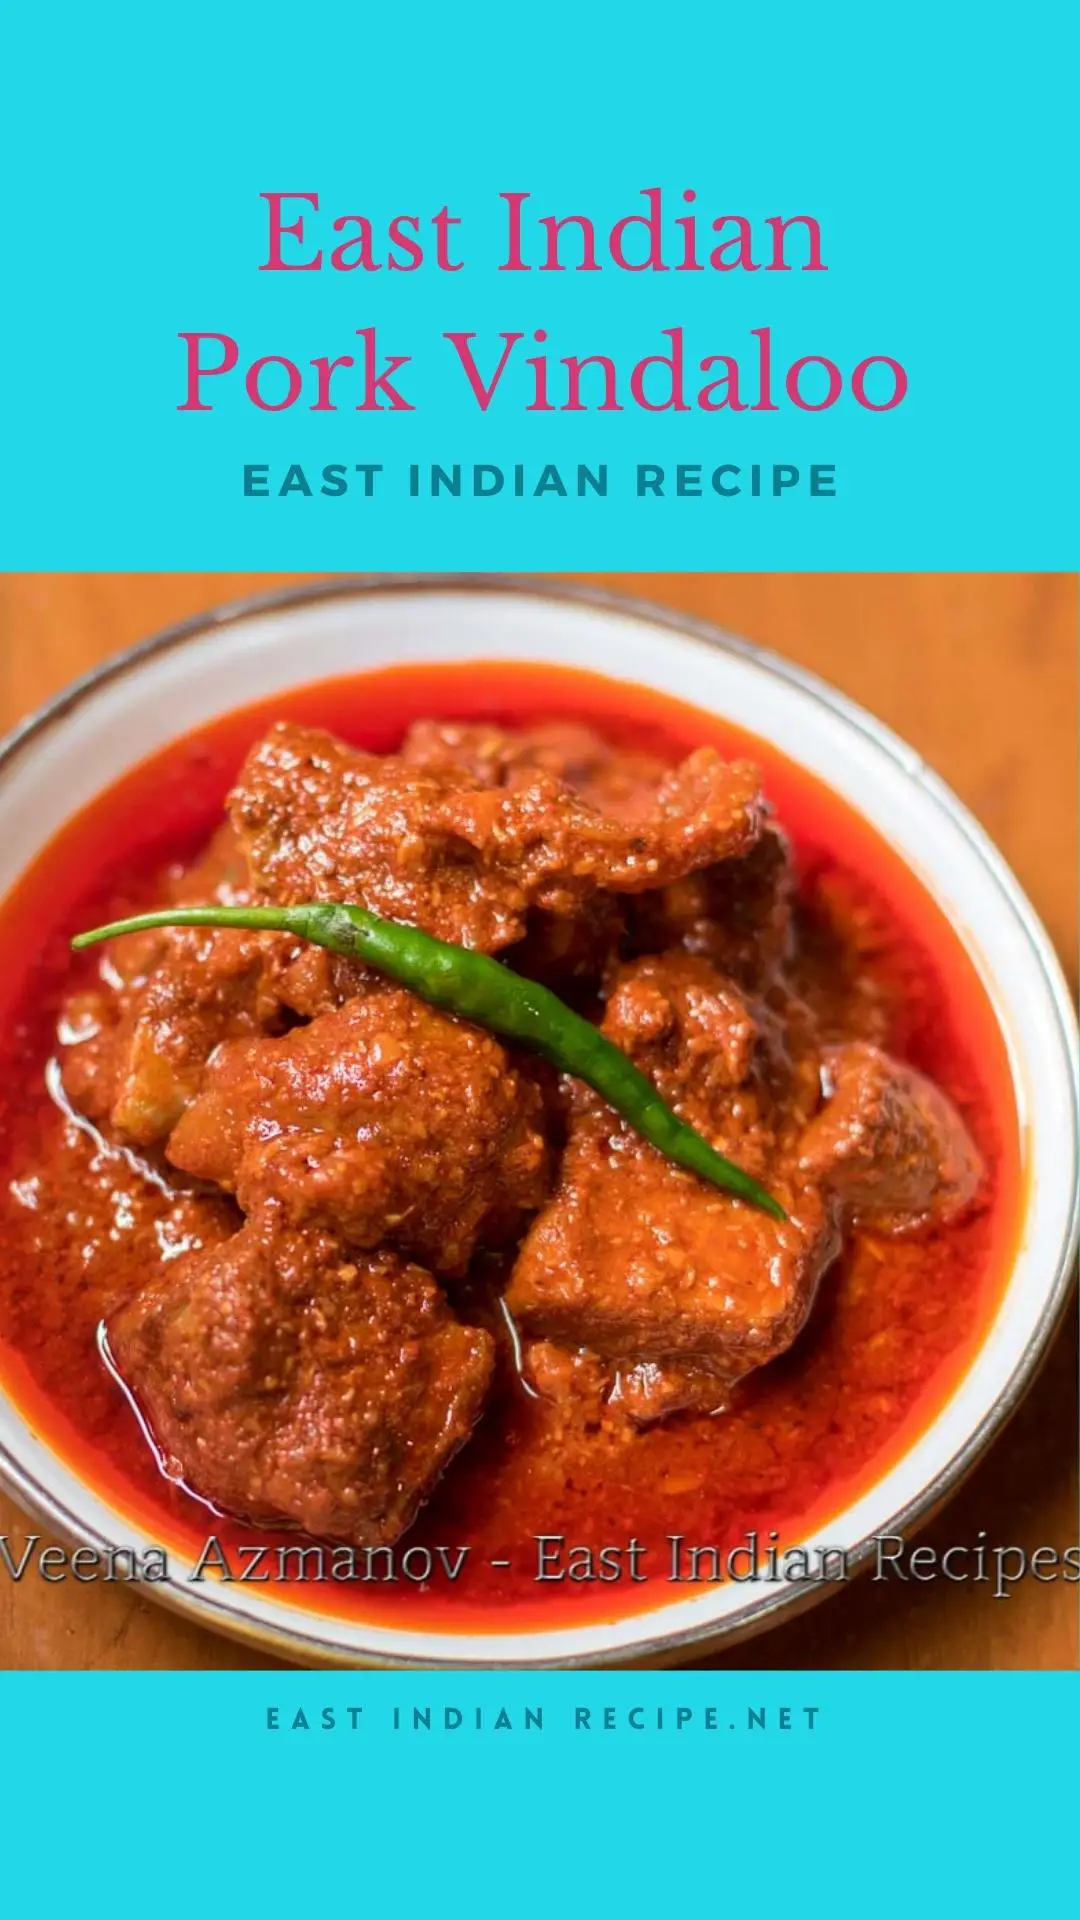 Pork Vindaloo - East Indian Pork Vindaloo Recipe - East Indian Recipes